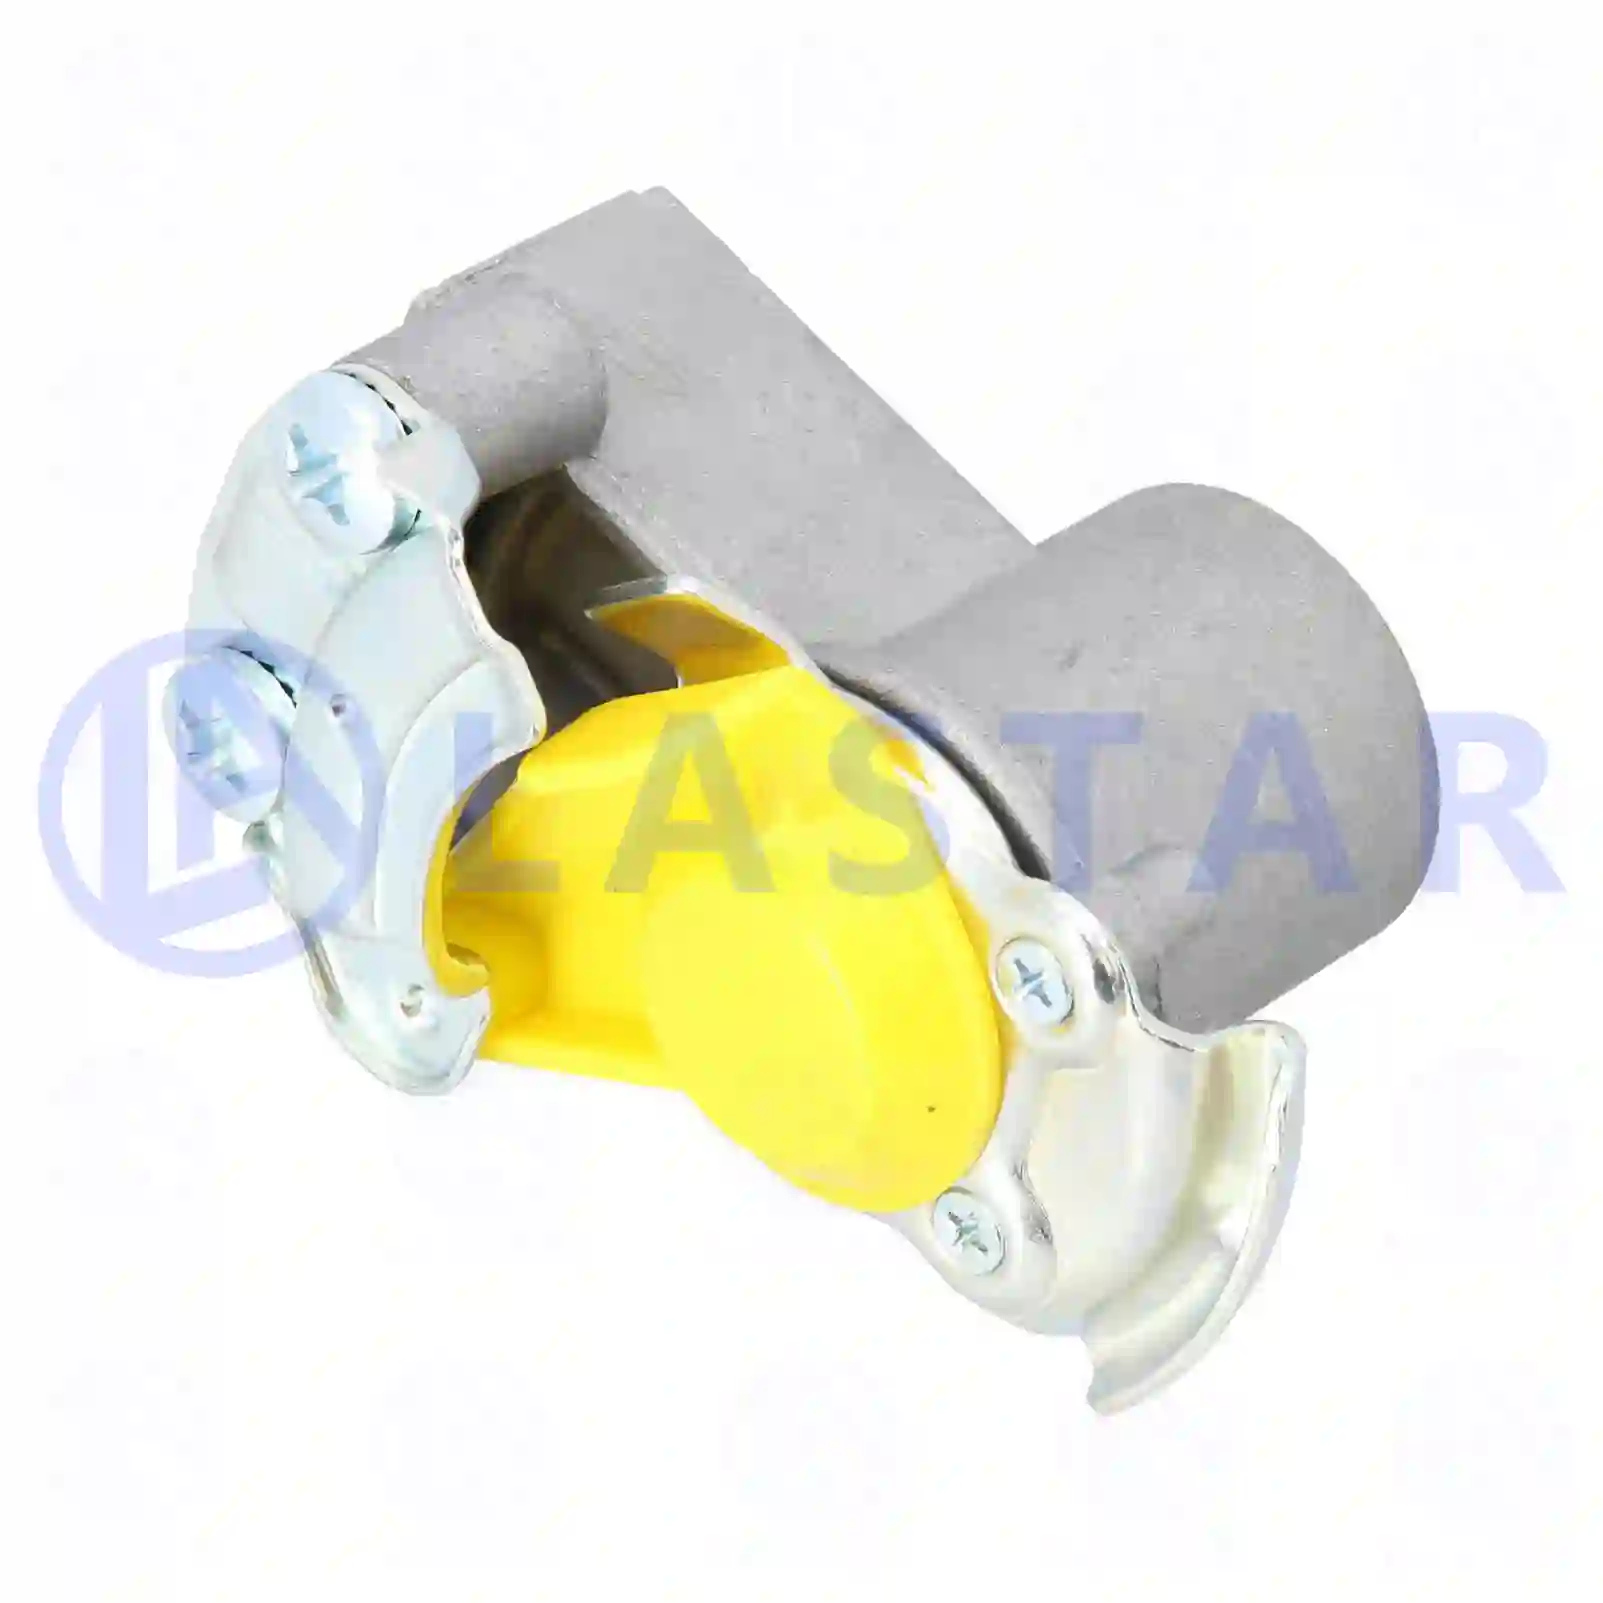  Palm coupling, yellow lid || Lastar Spare Part | Truck Spare Parts, Auotomotive Spare Parts